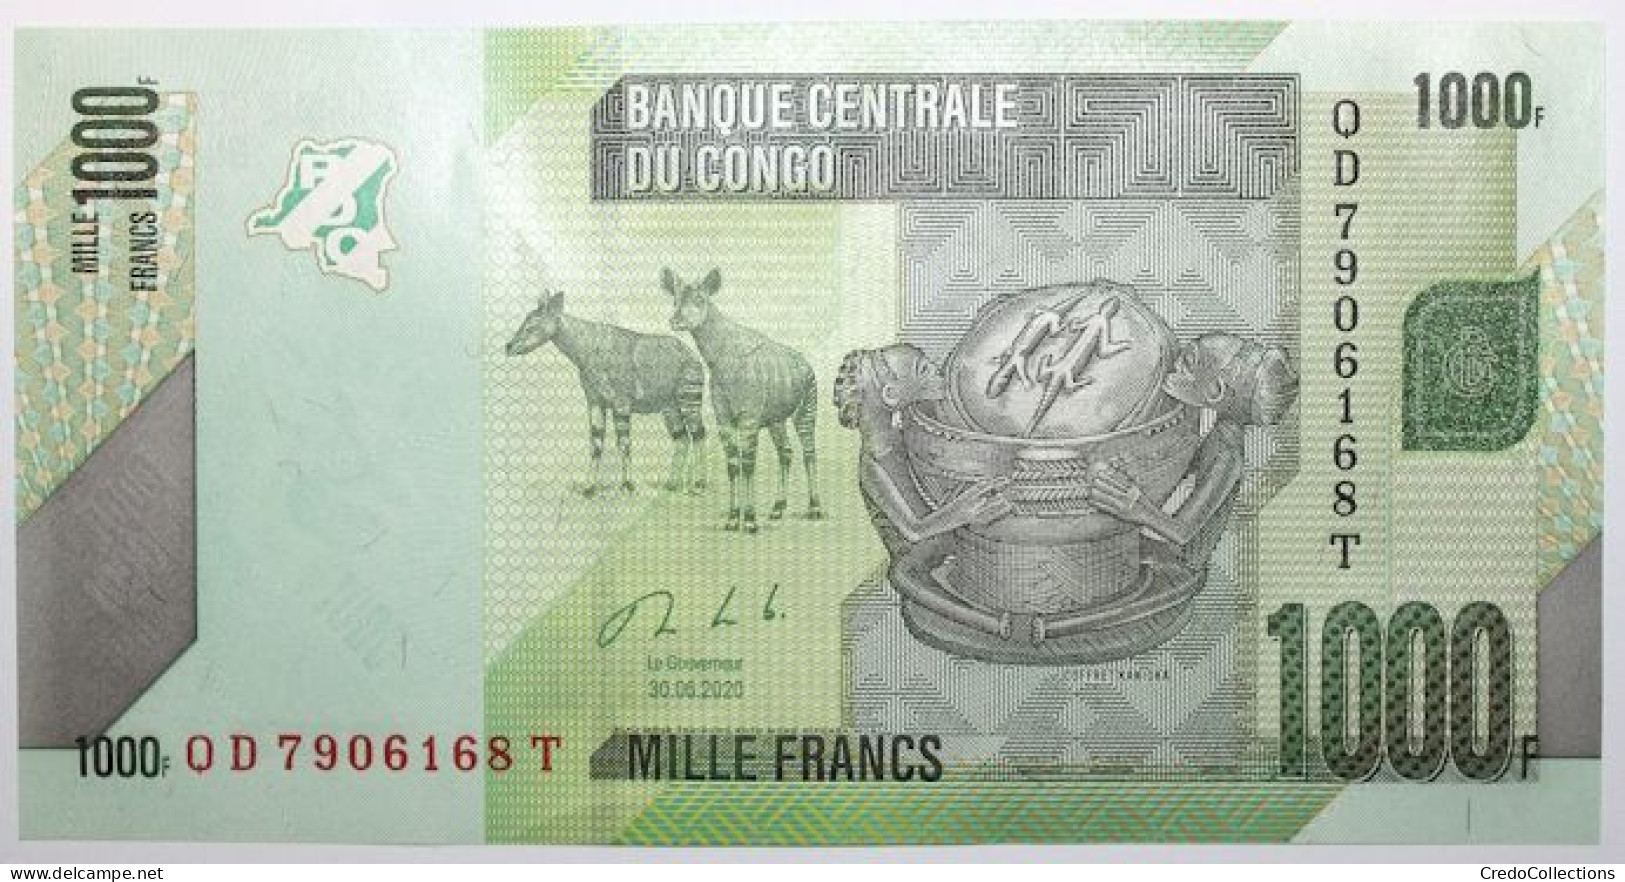 Congo (RD) - 1000 Francs - 2020 - PICK 101c - NEUF - Demokratische Republik Kongo & Zaire